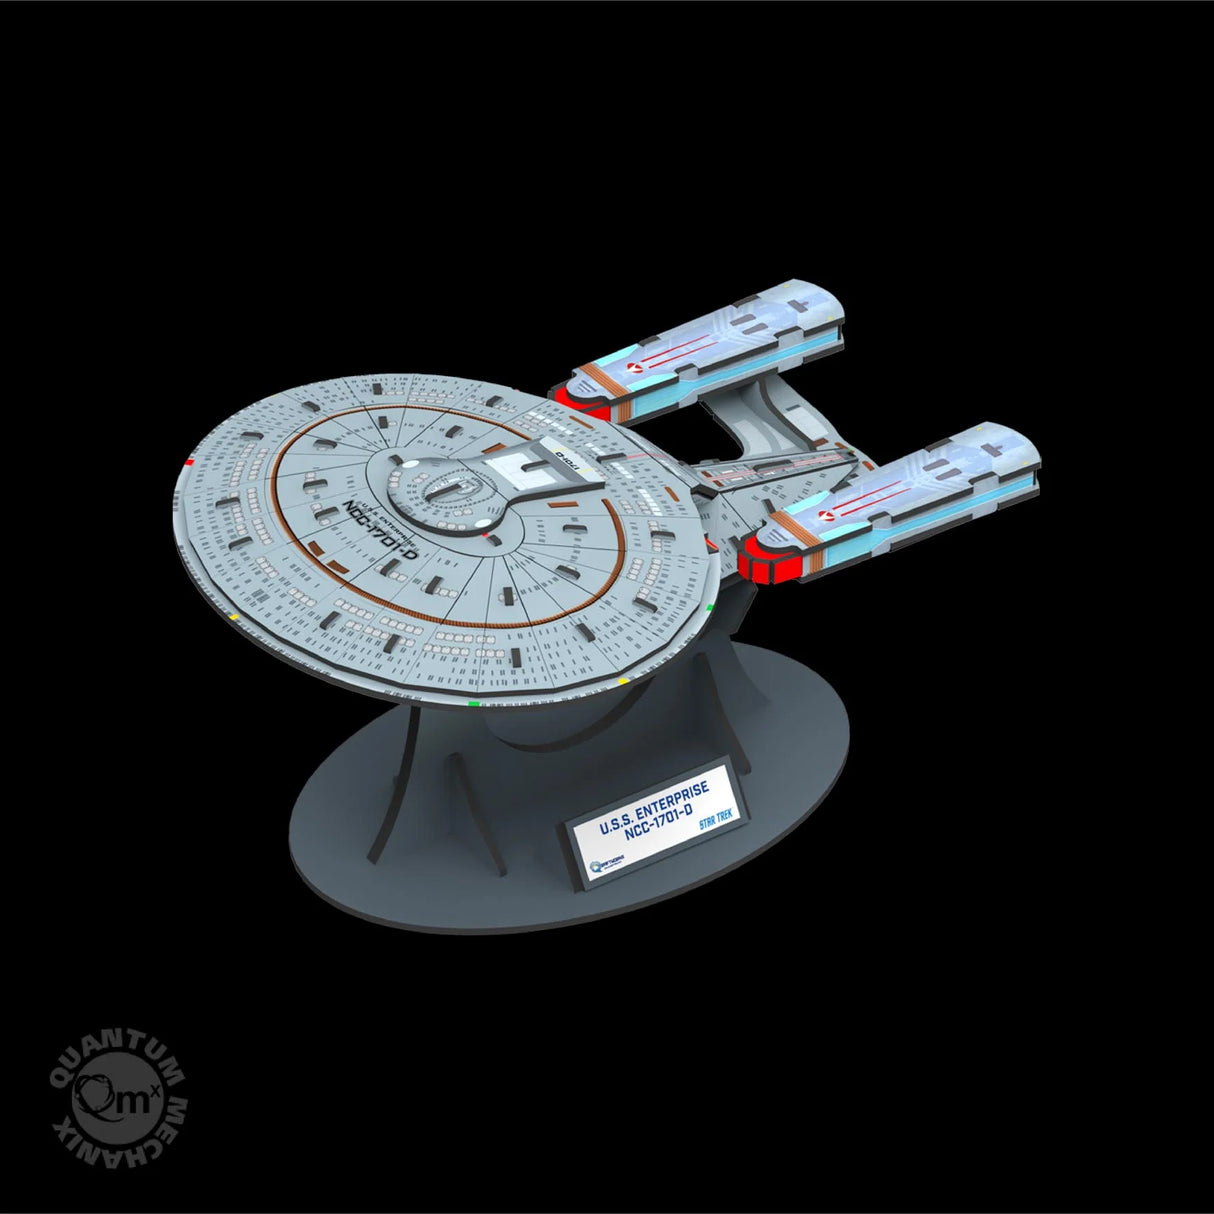 Star Trek USS Enterprise NCC-1701-D Qraftworks Puzzlefleet 3D Model Kit